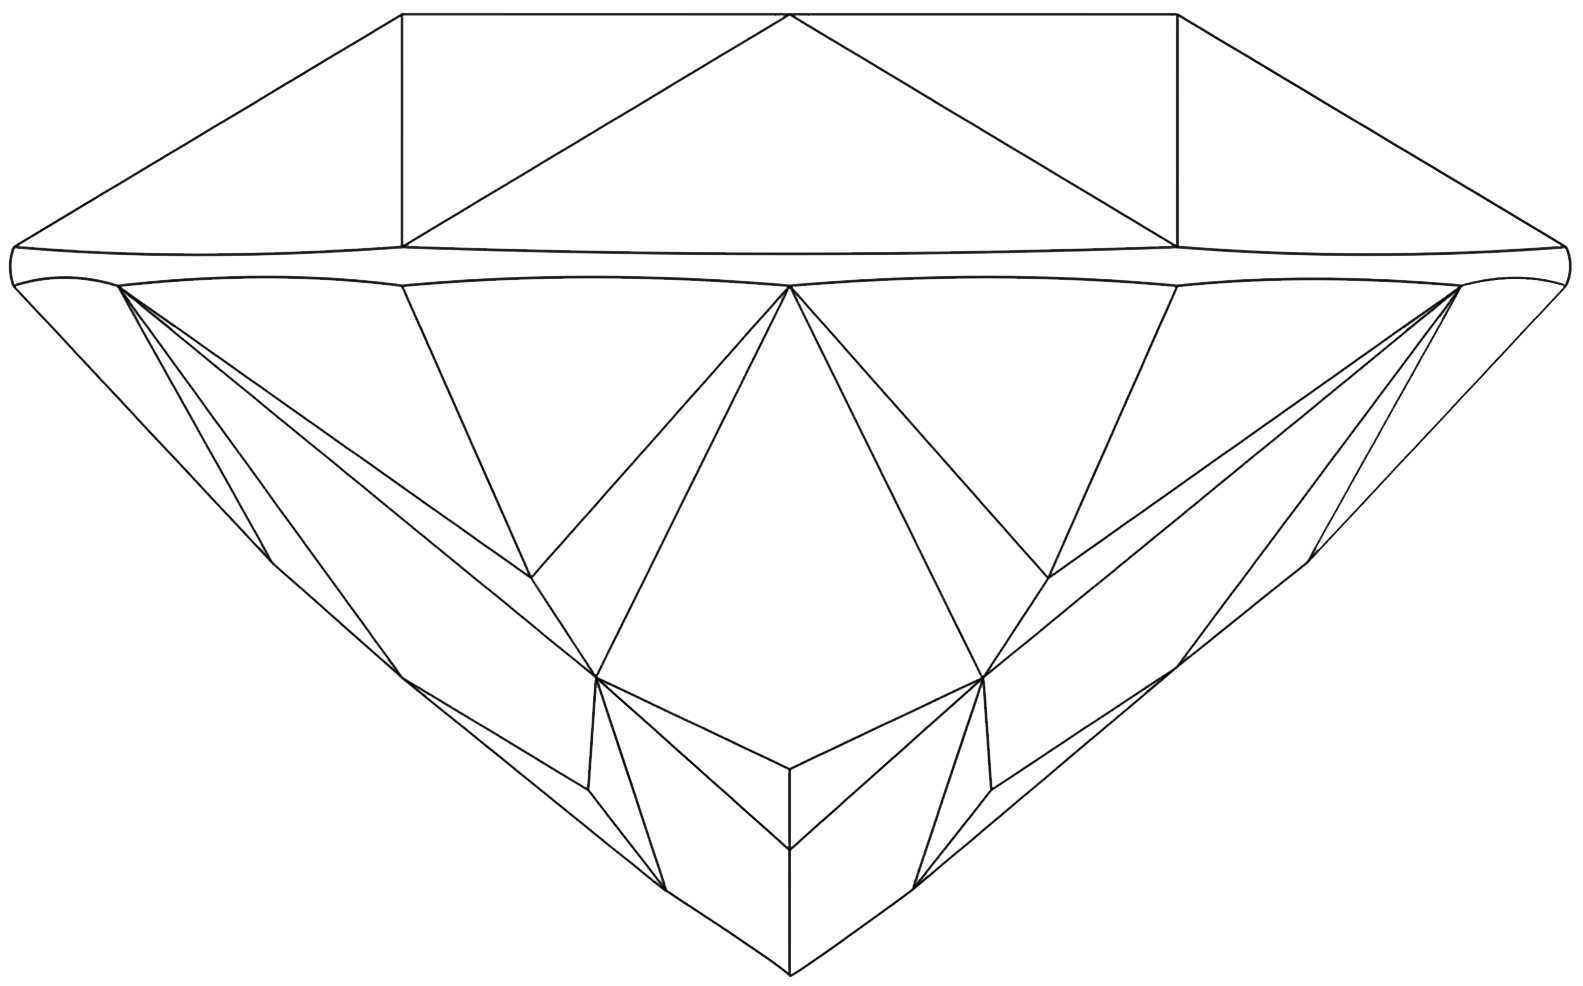 matlab画一个立体钻石图片